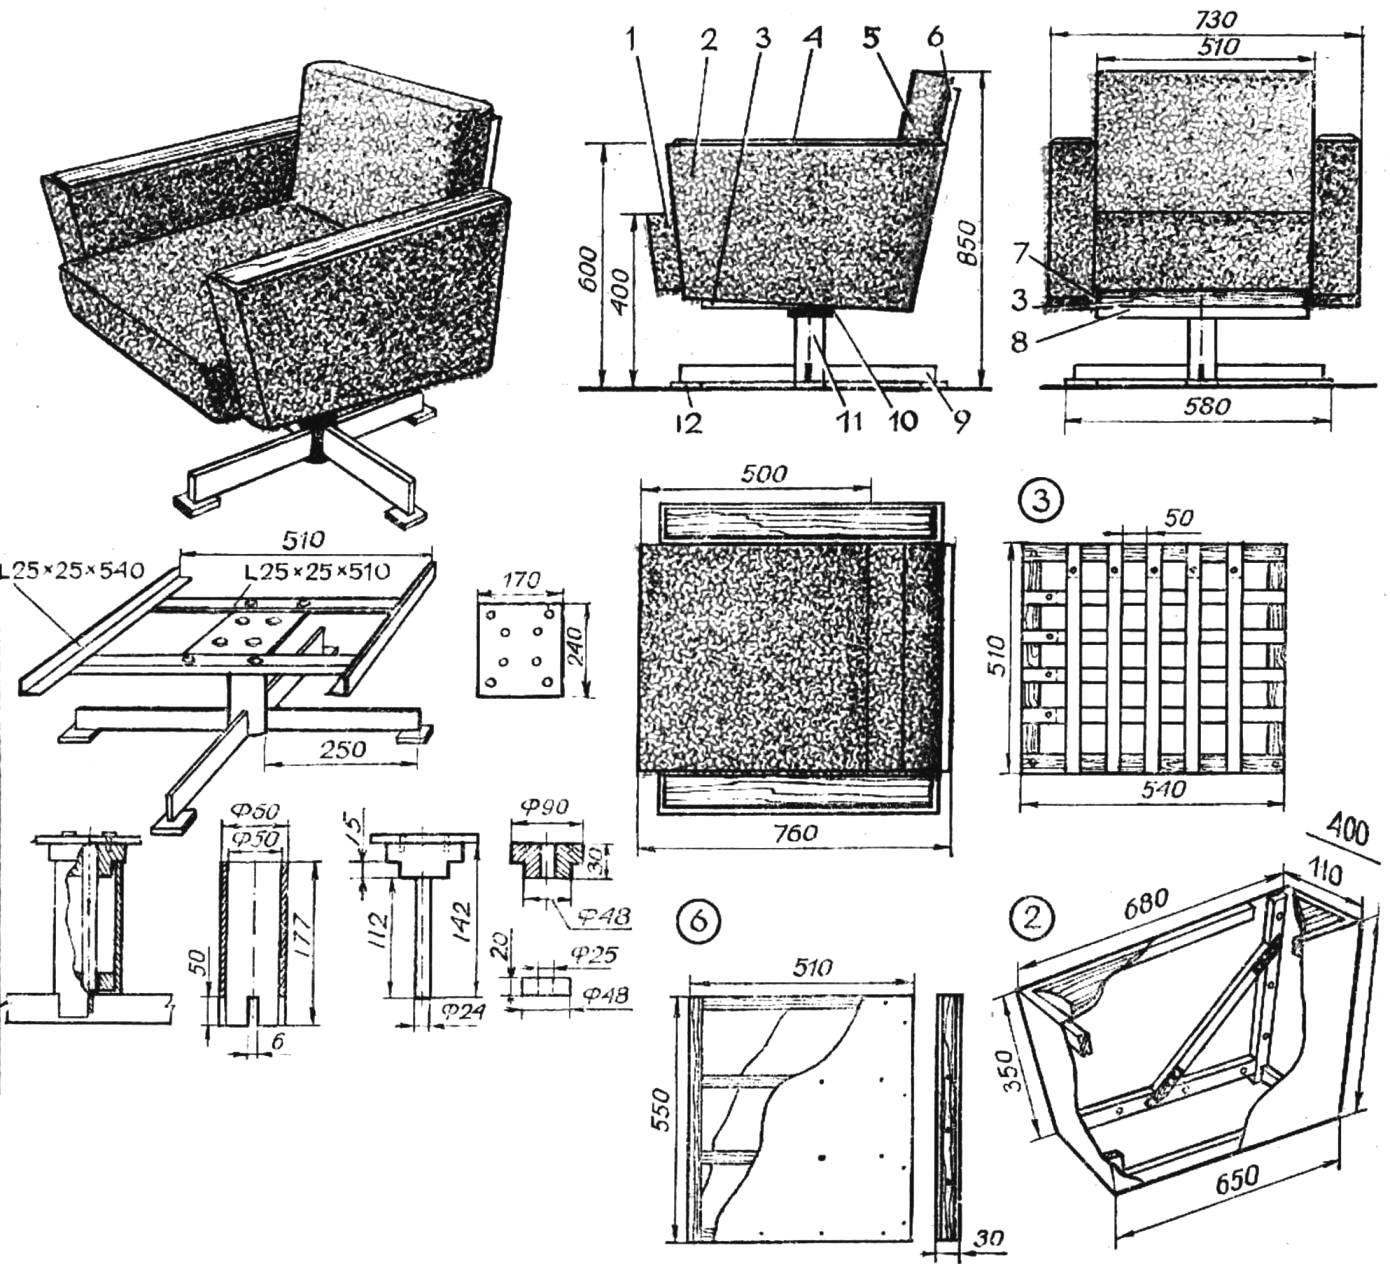 Fig. 3. Soft swivel chair